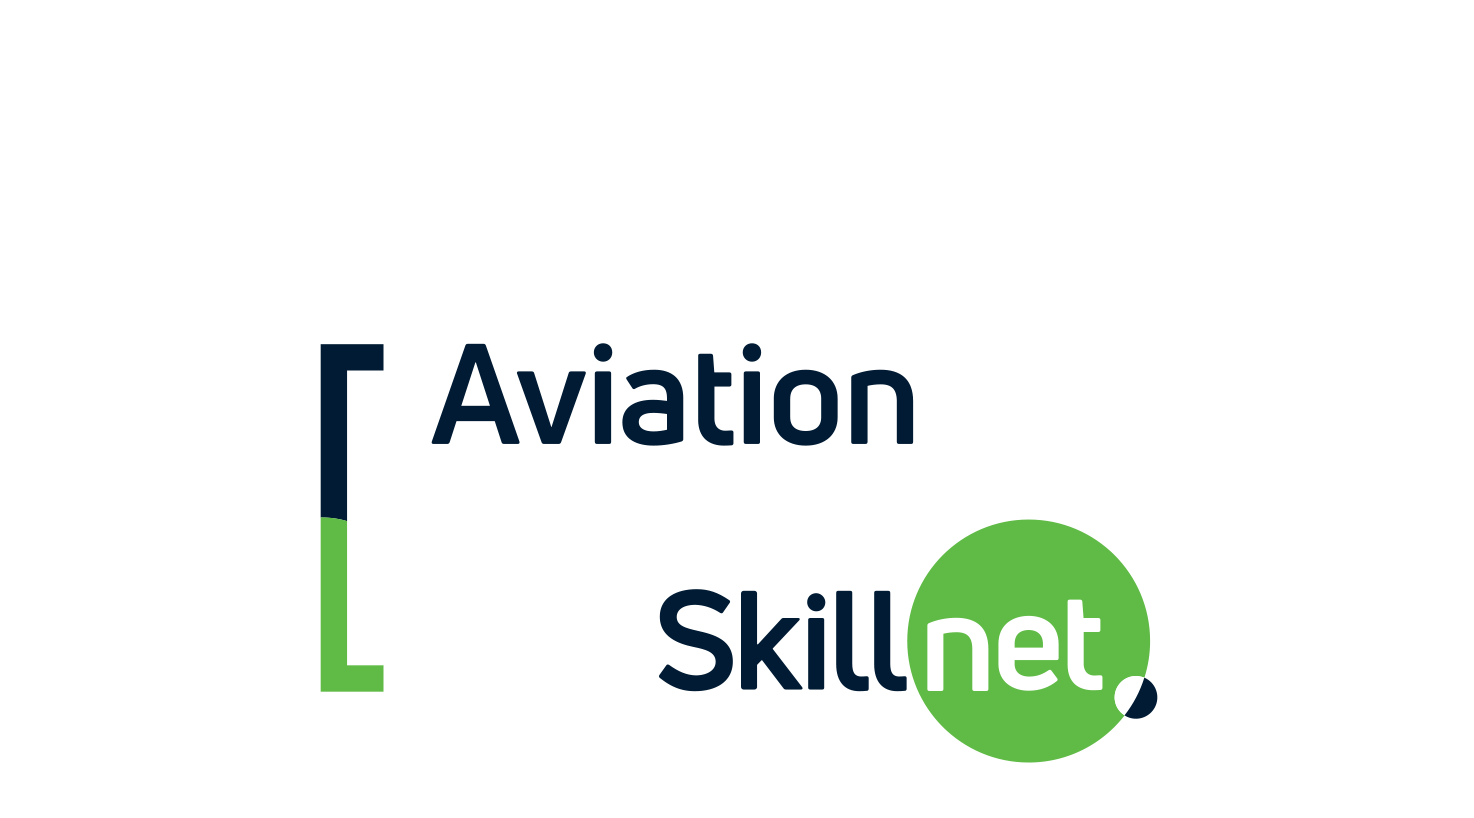 Aviation Skillnet